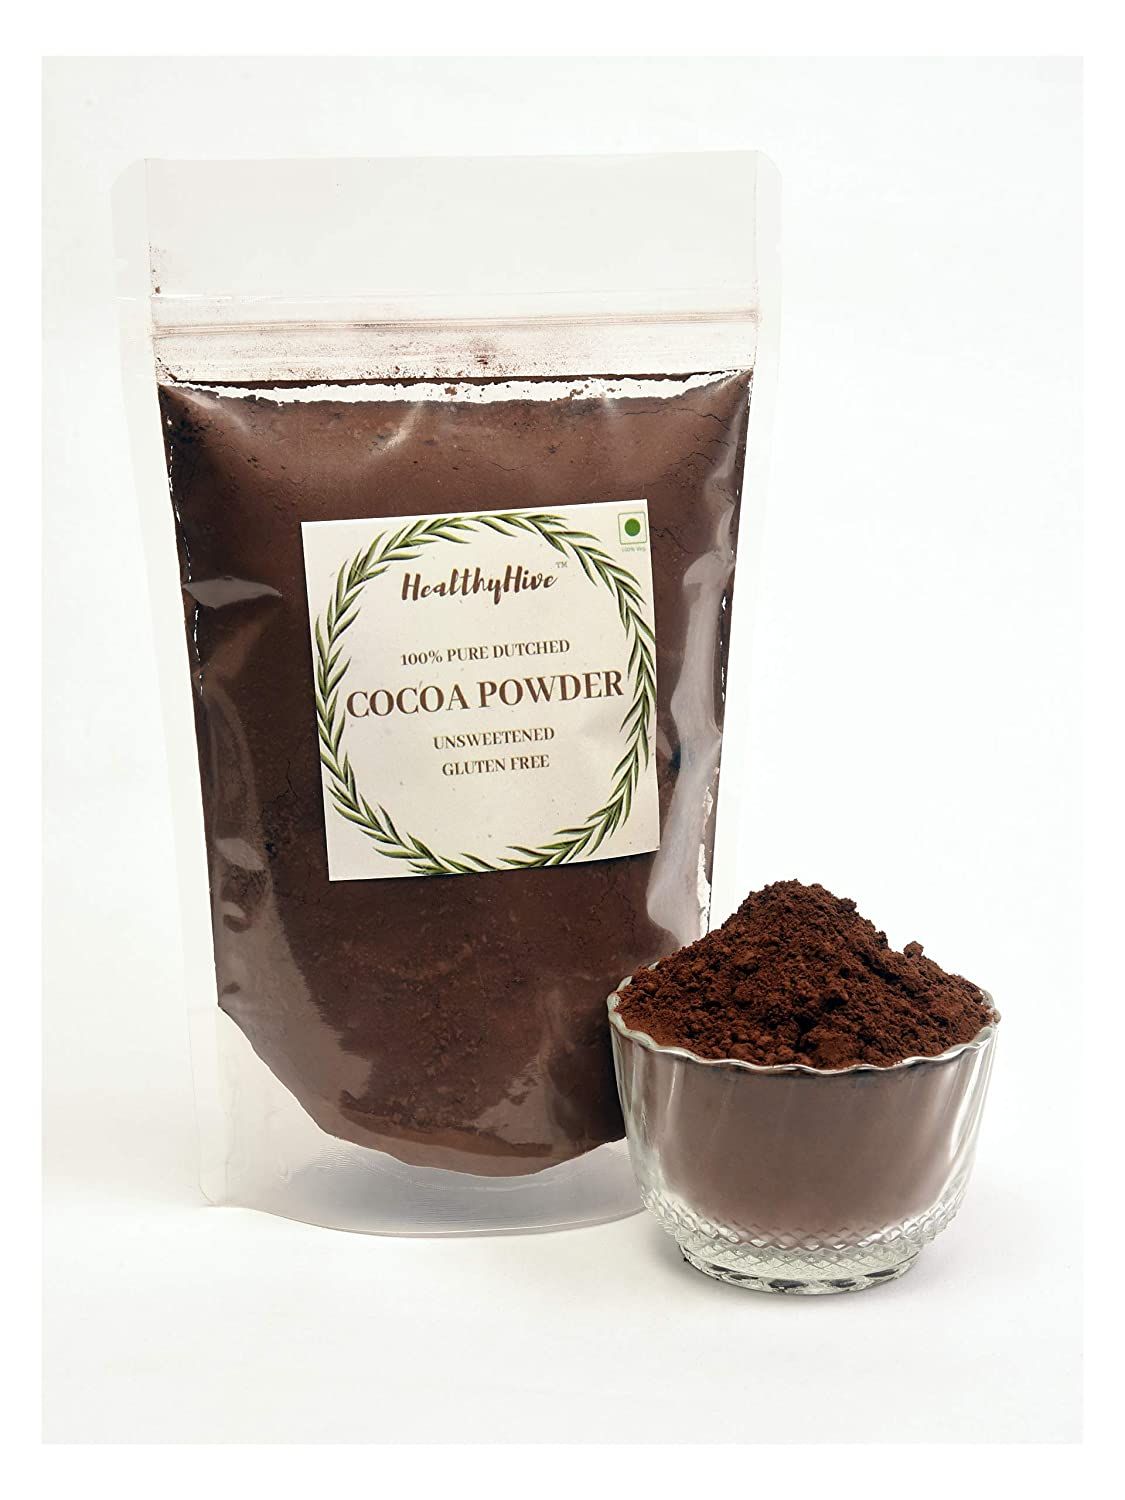 Healthyhive Cocoa Powder Image